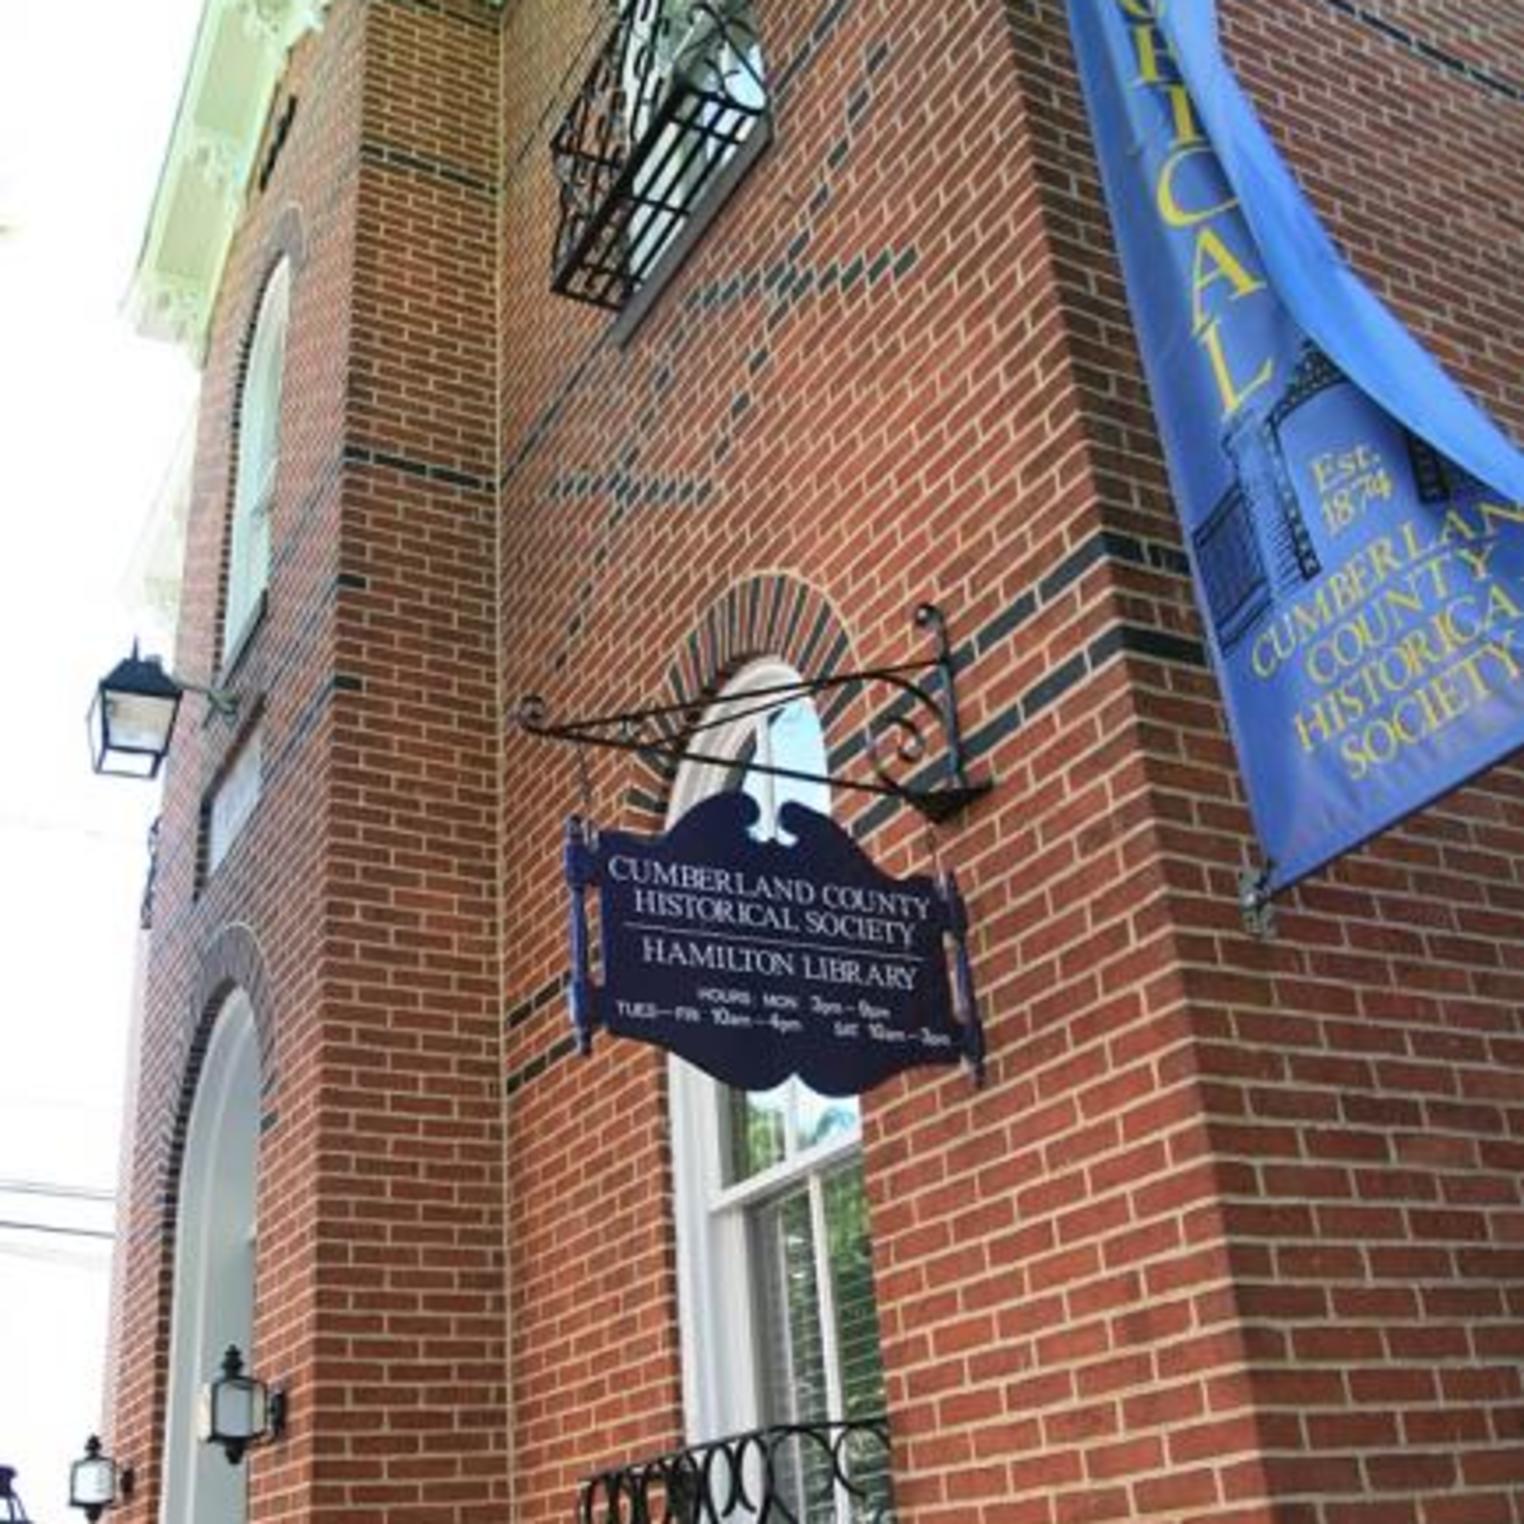 Cumberland County Historical Society and Hamilton Library